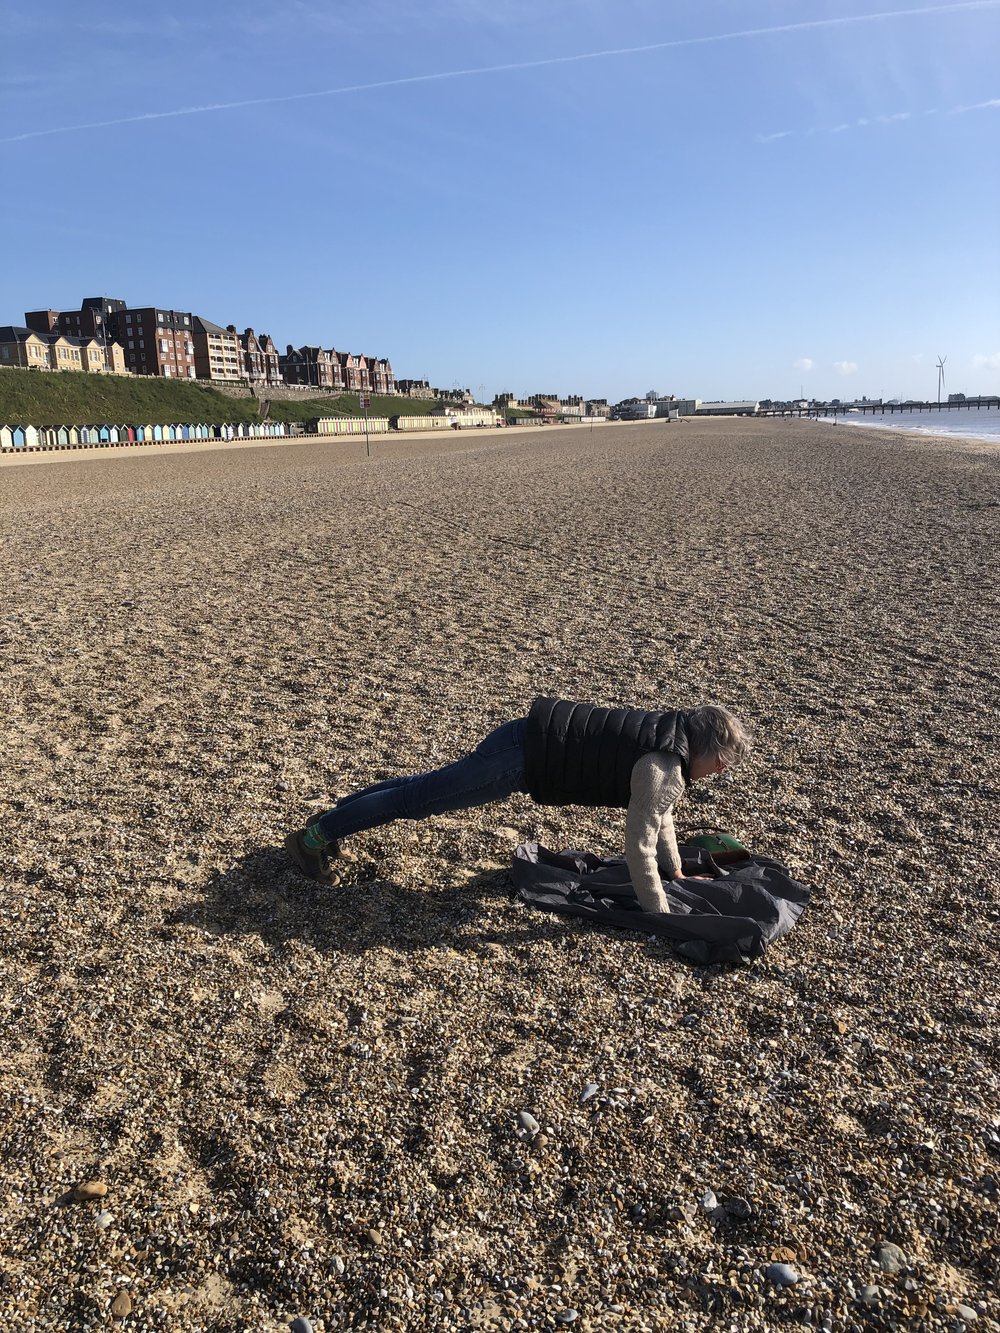 Yoga on the beach in Lowestoft